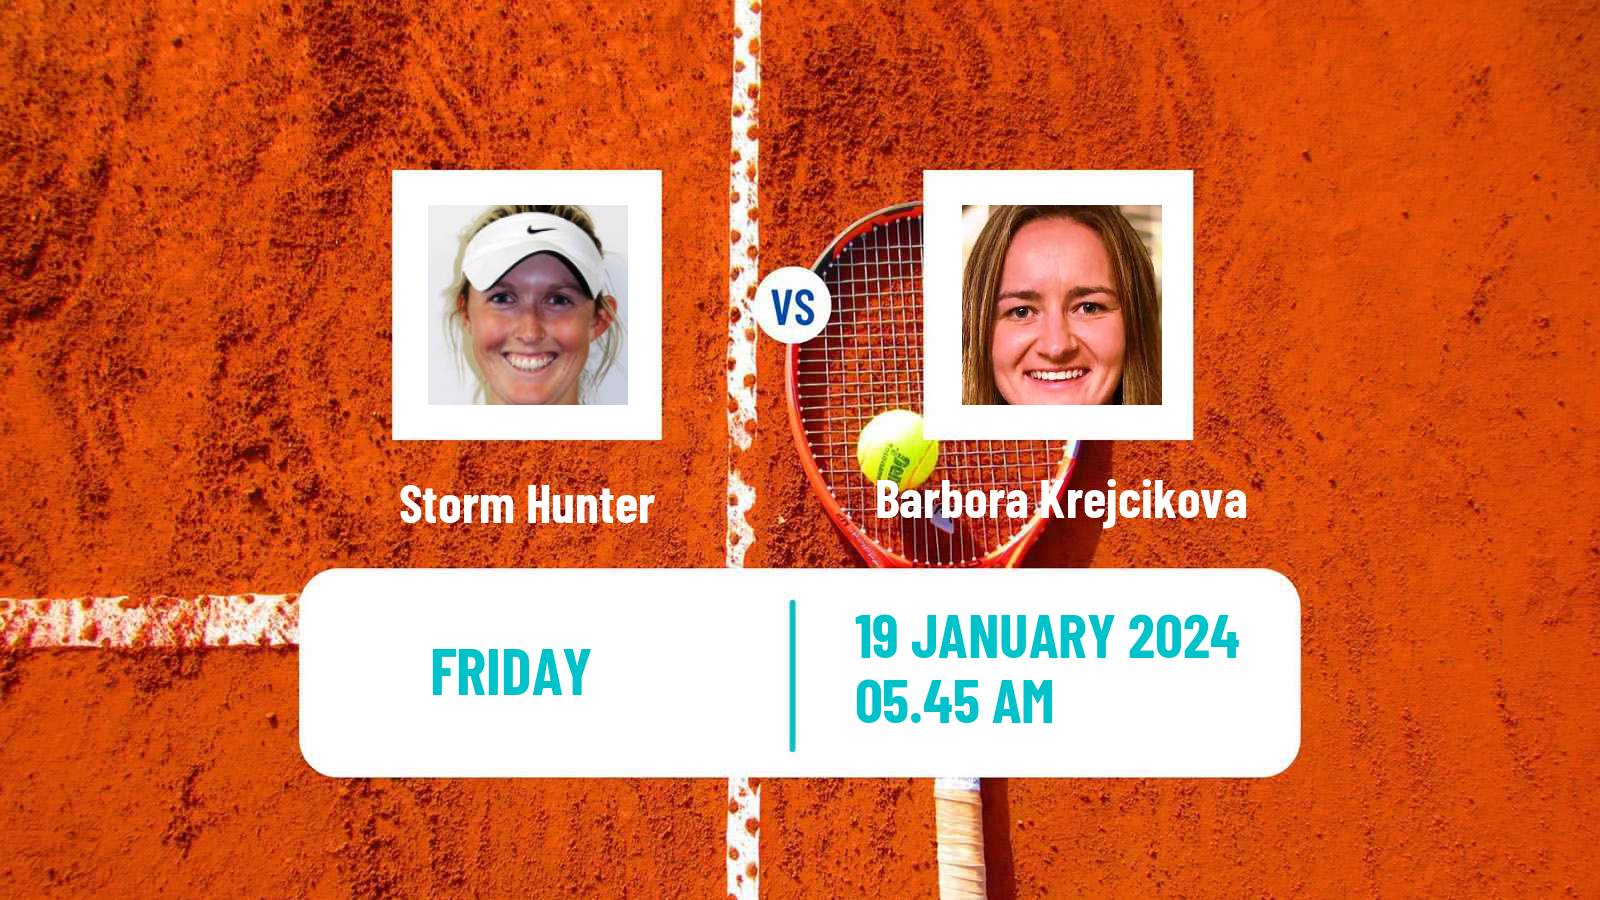 Tennis WTA Australian Open Storm Hunter - Barbora Krejcikova